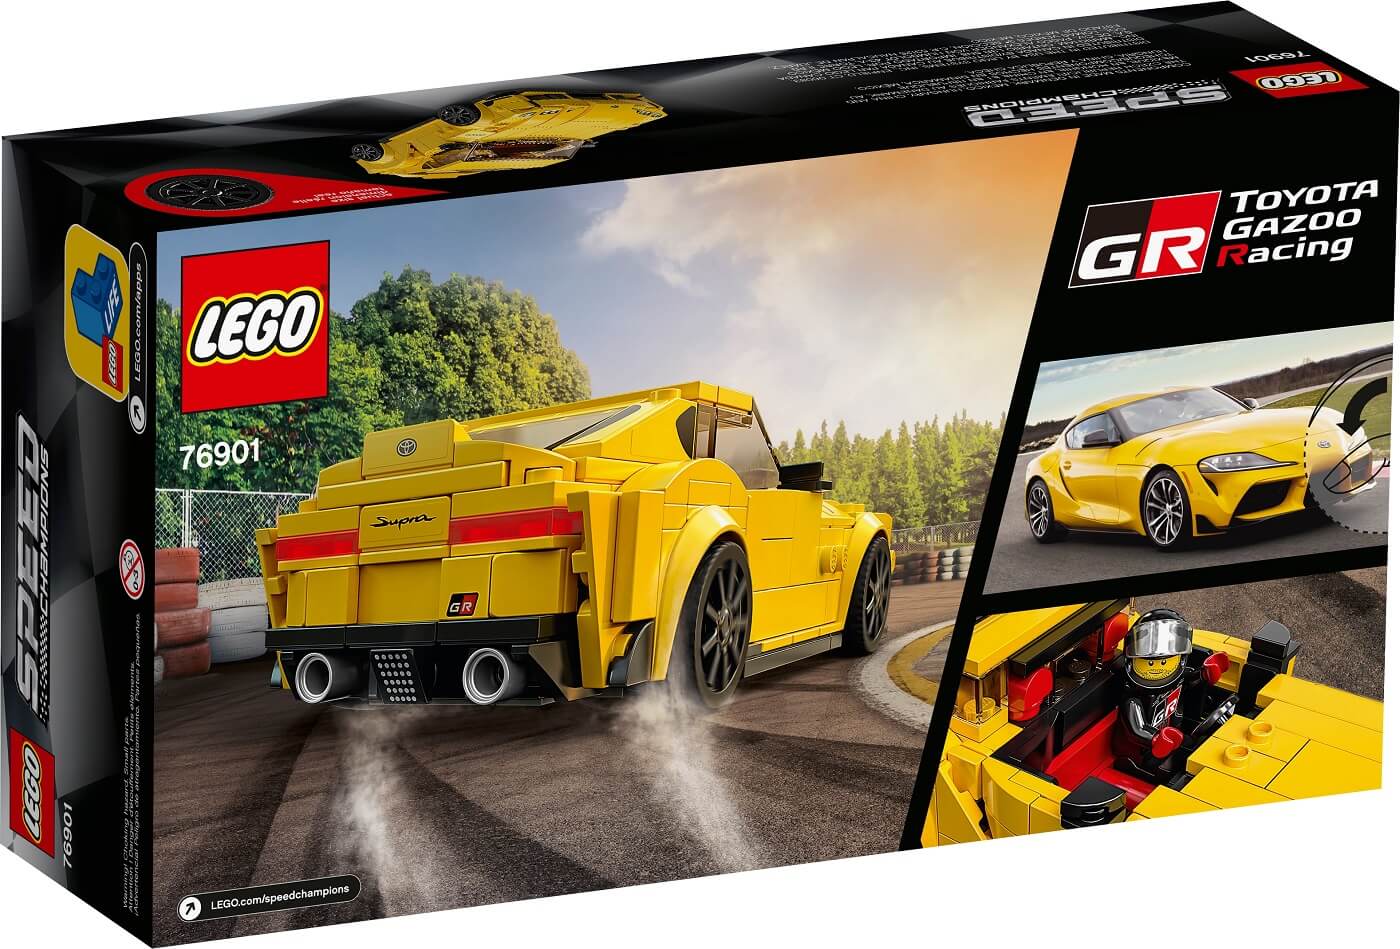 Toyota GR Supra ( Lego 76901 ) imagen f